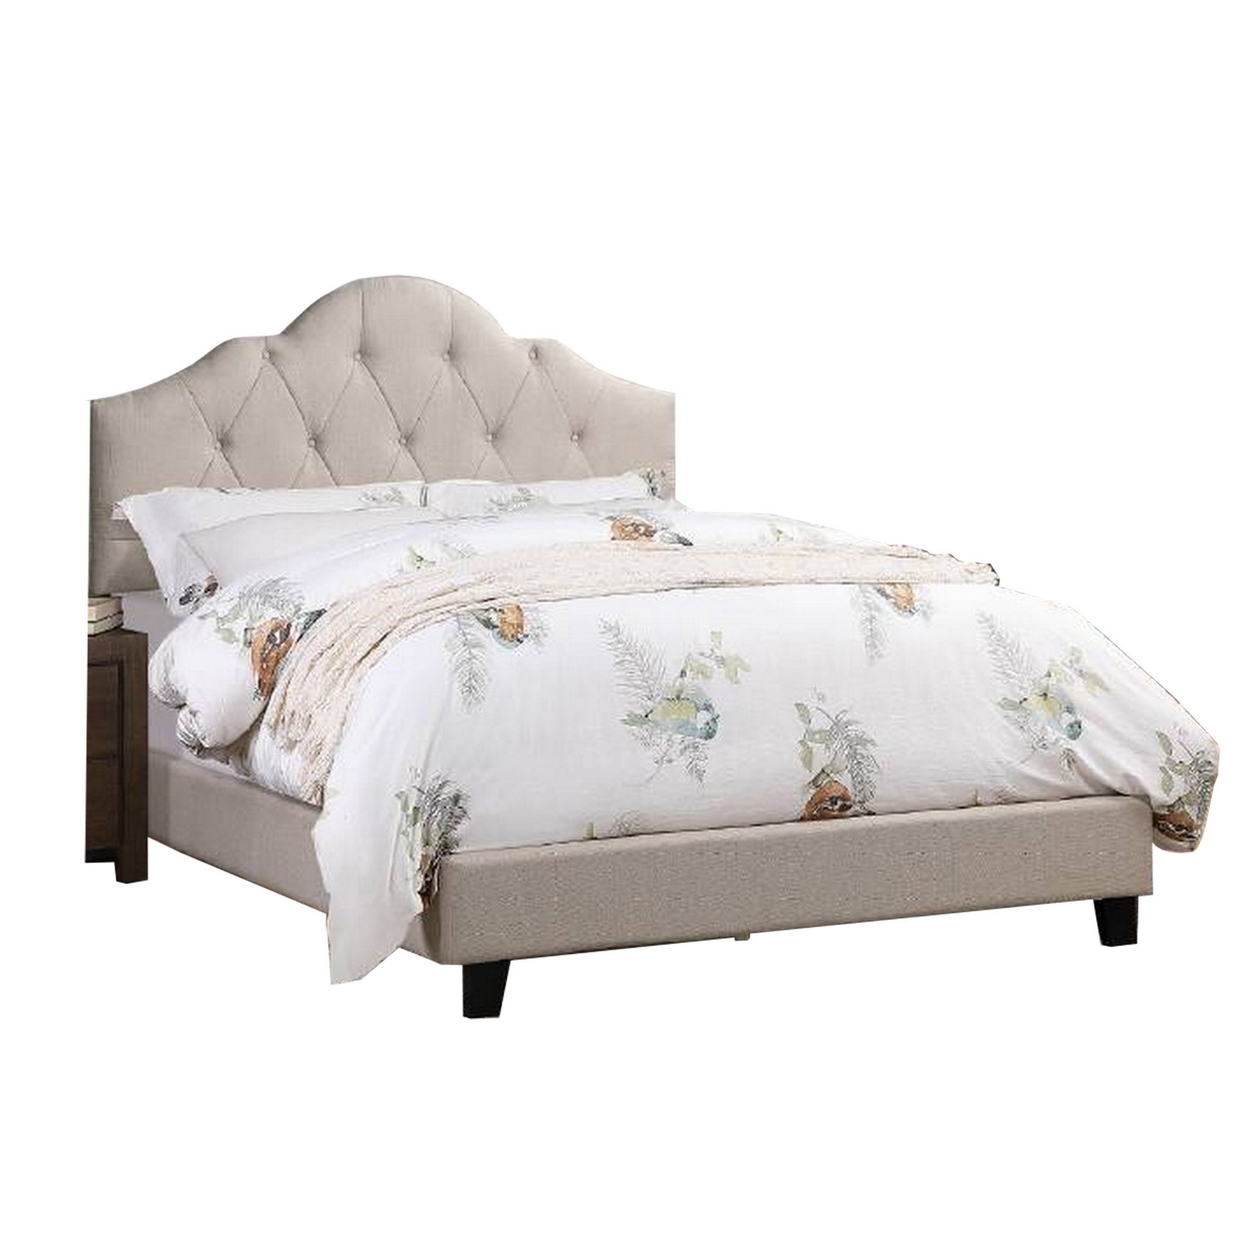 Eni Upholstered Full Size Bed, Tufted Adjustable Headboard, Taupe Fabric- Saltoro Sherpi